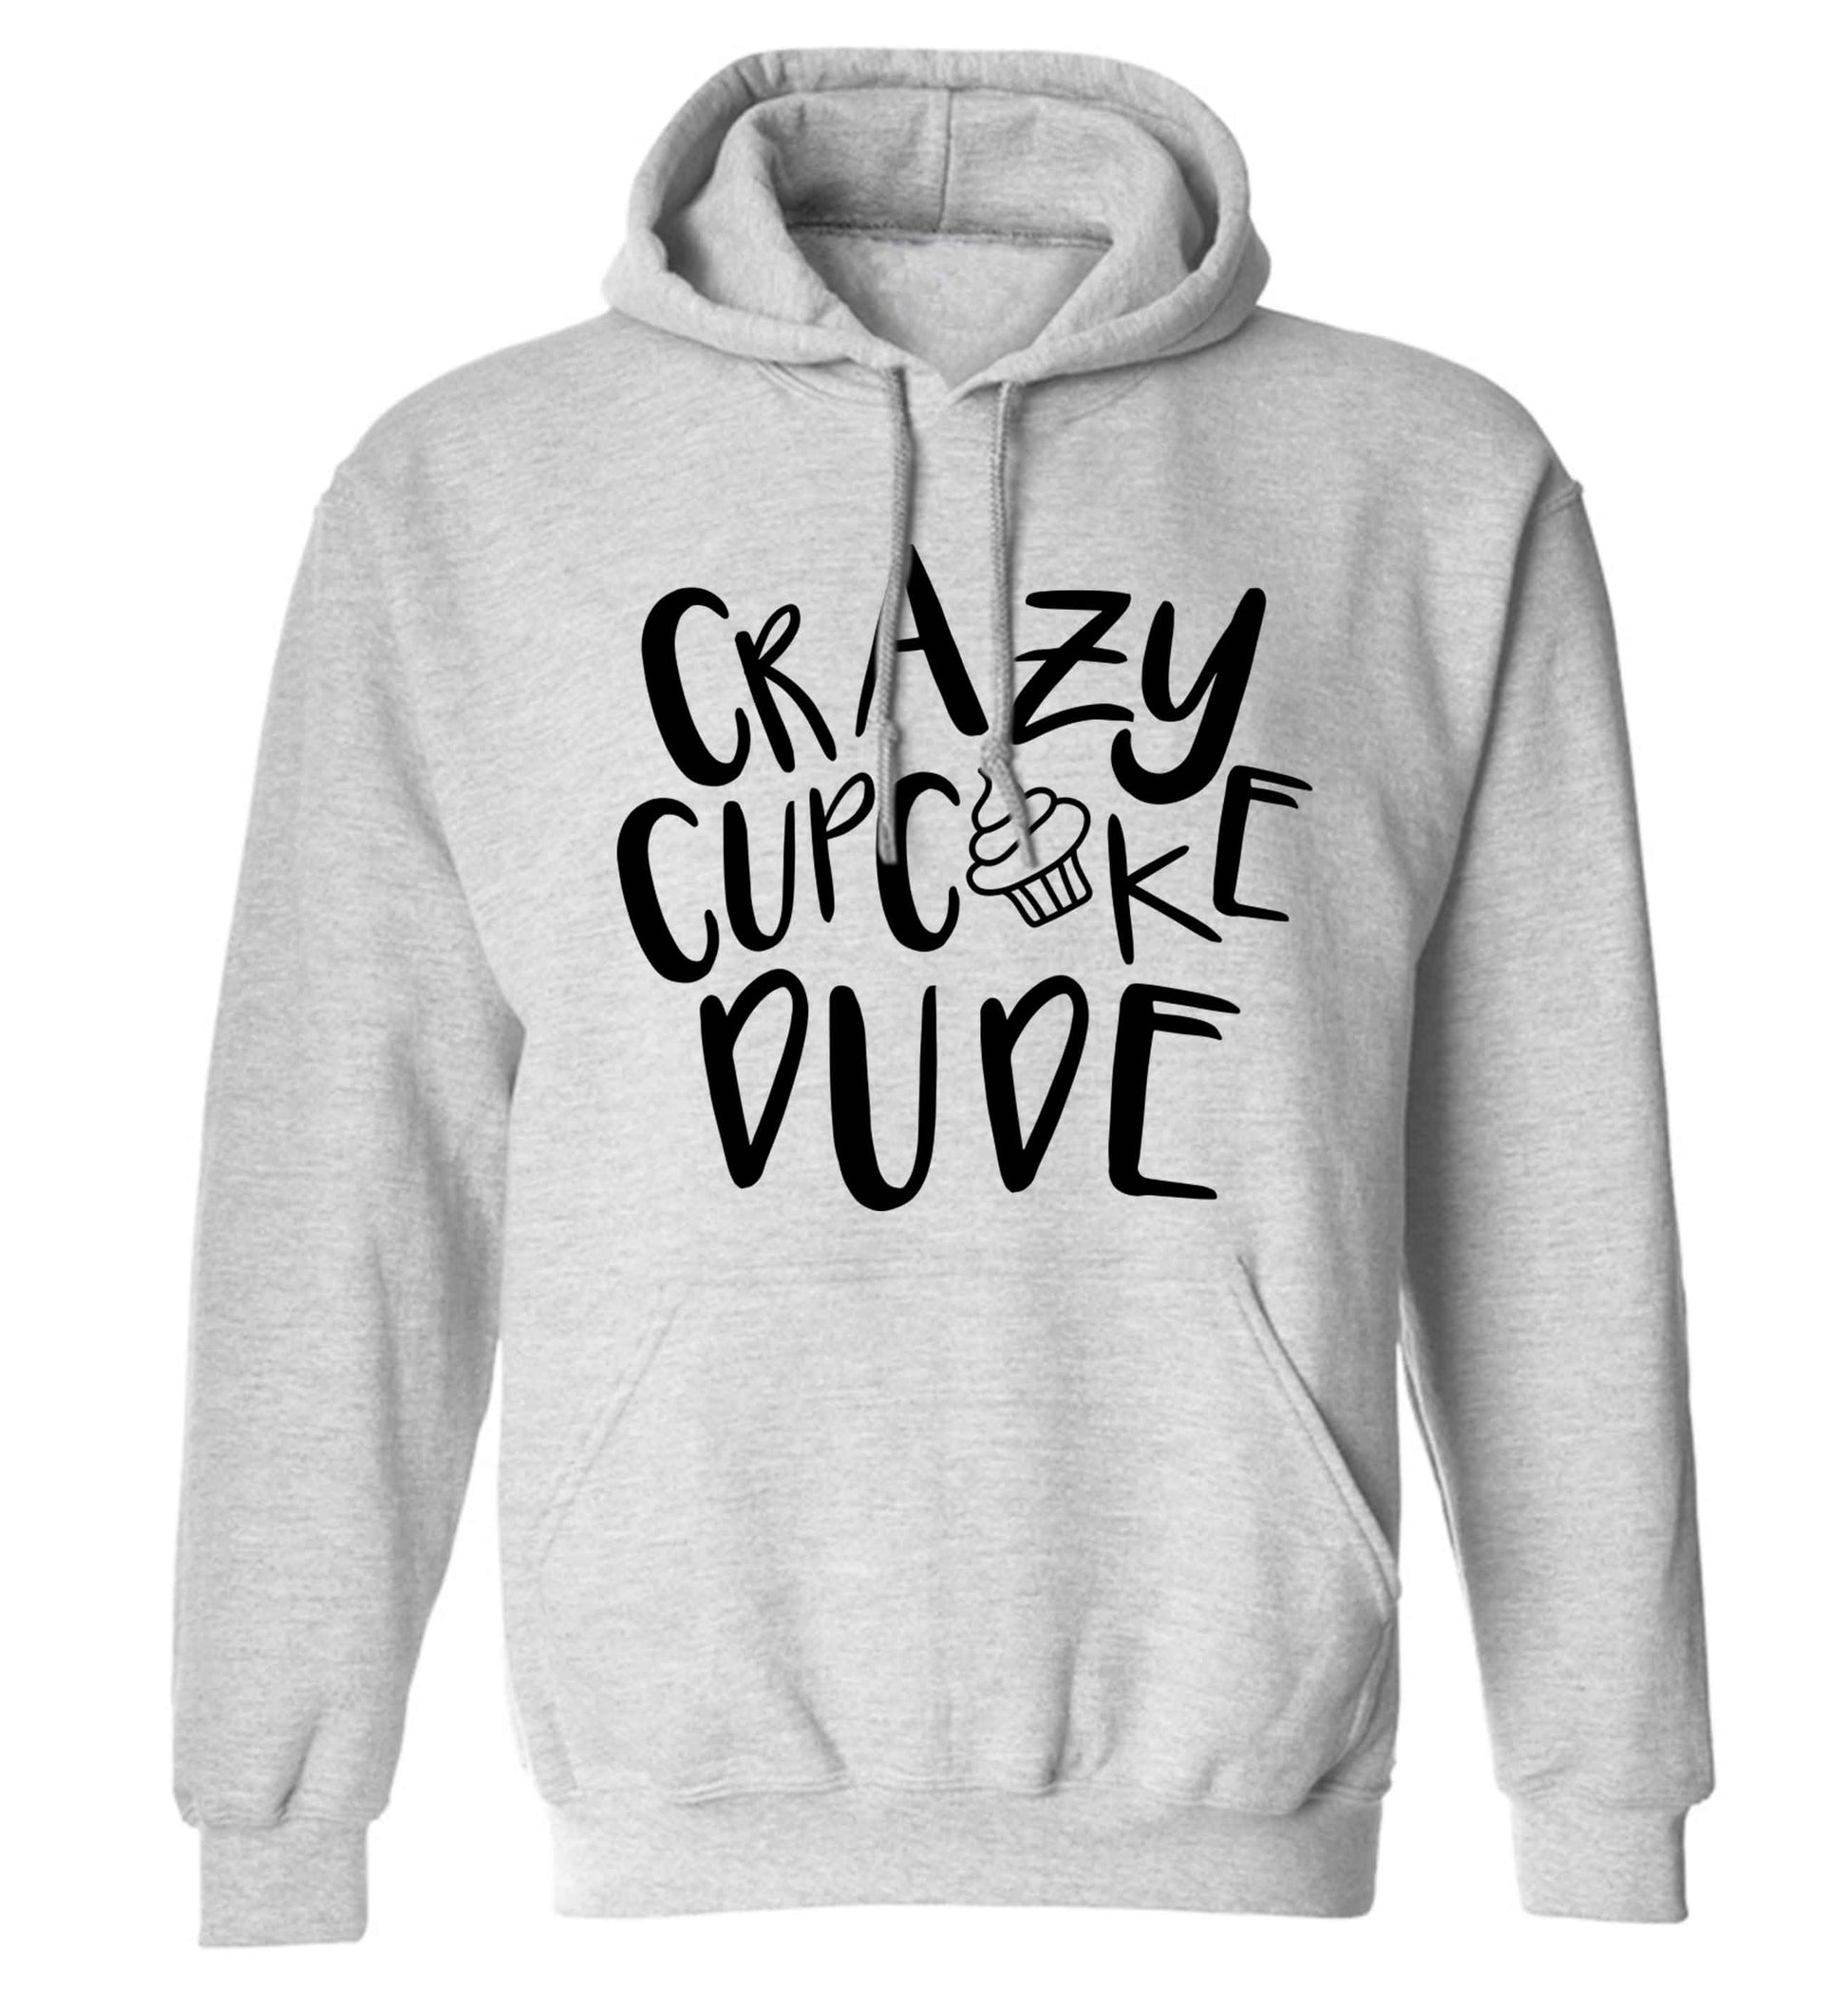 Crazy cupcake dude adults unisex grey hoodie 2XL